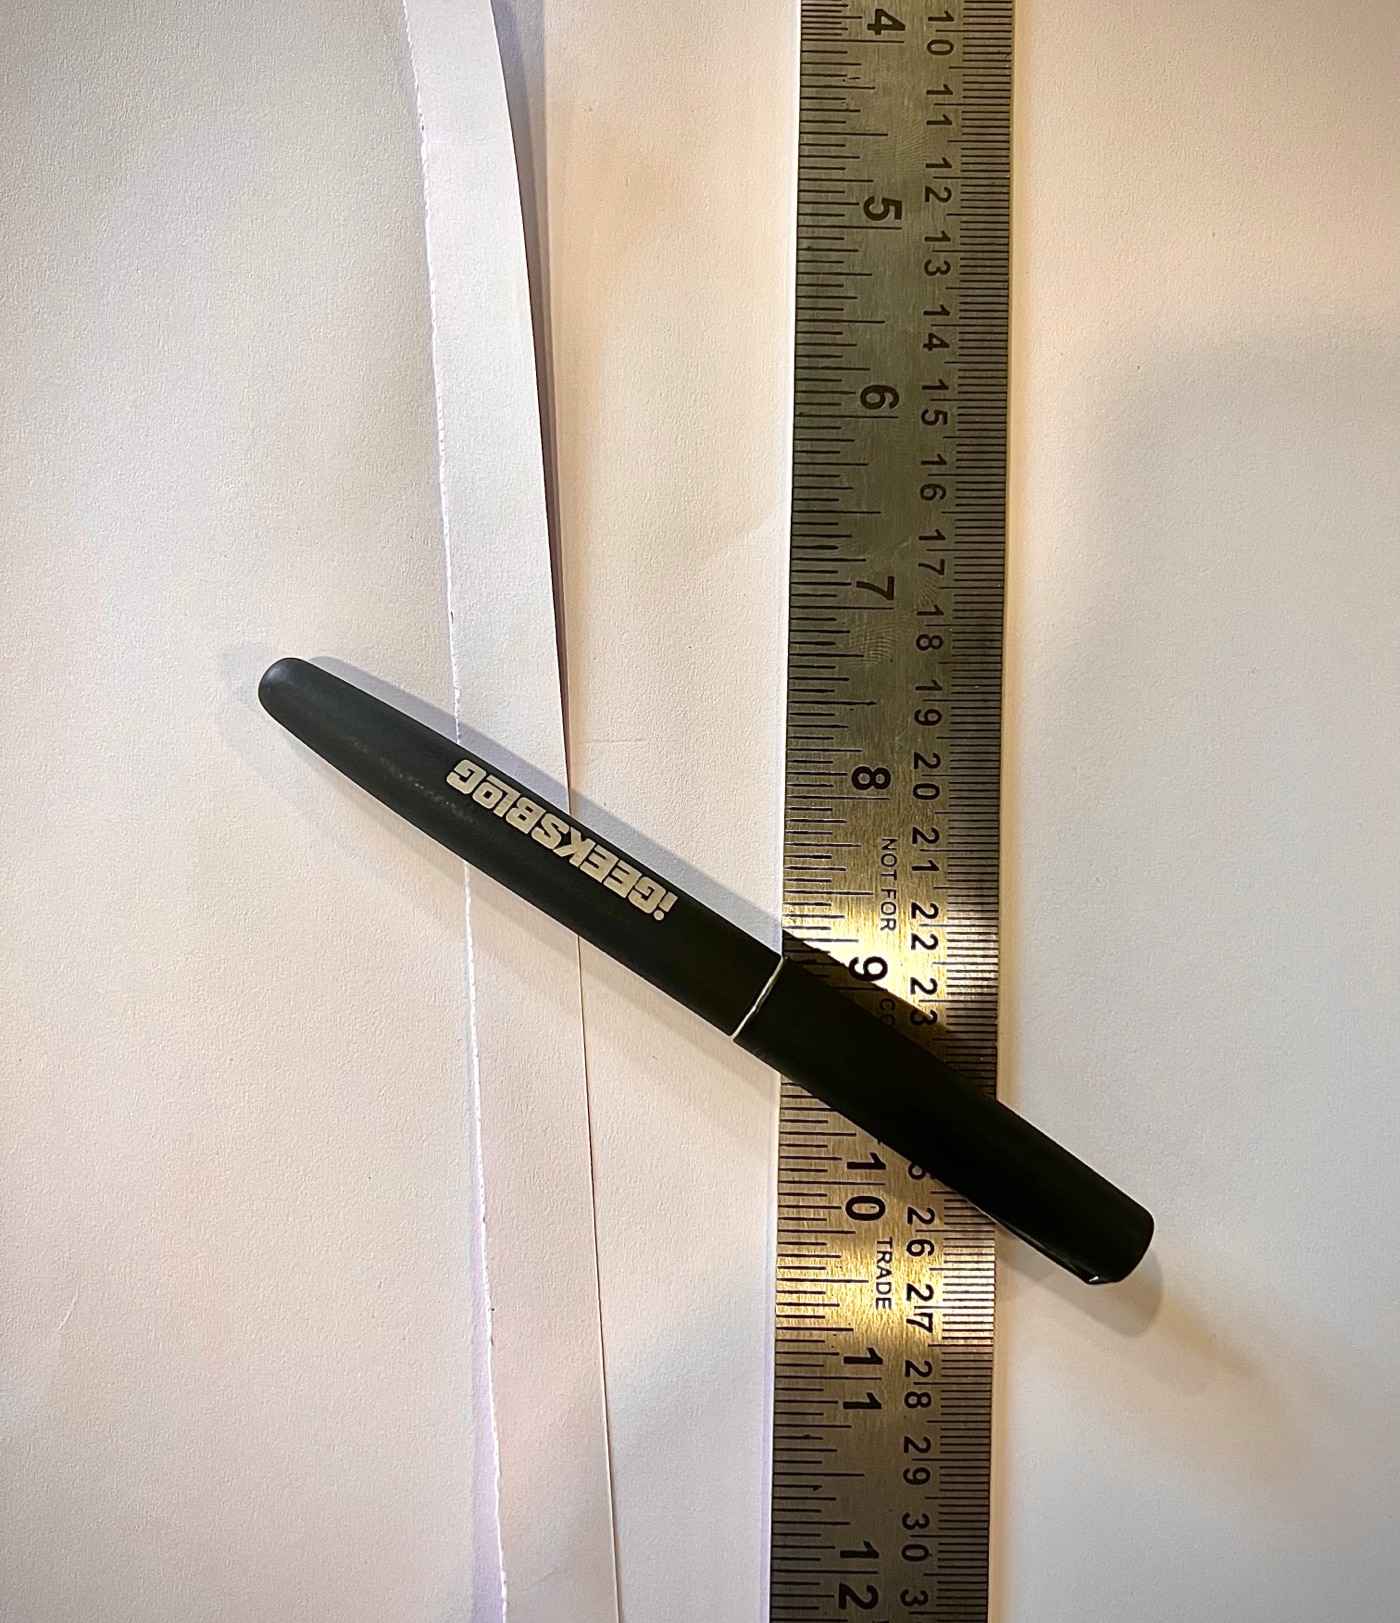 Take an A4 sheet, a pen and a ruler and cut a strip